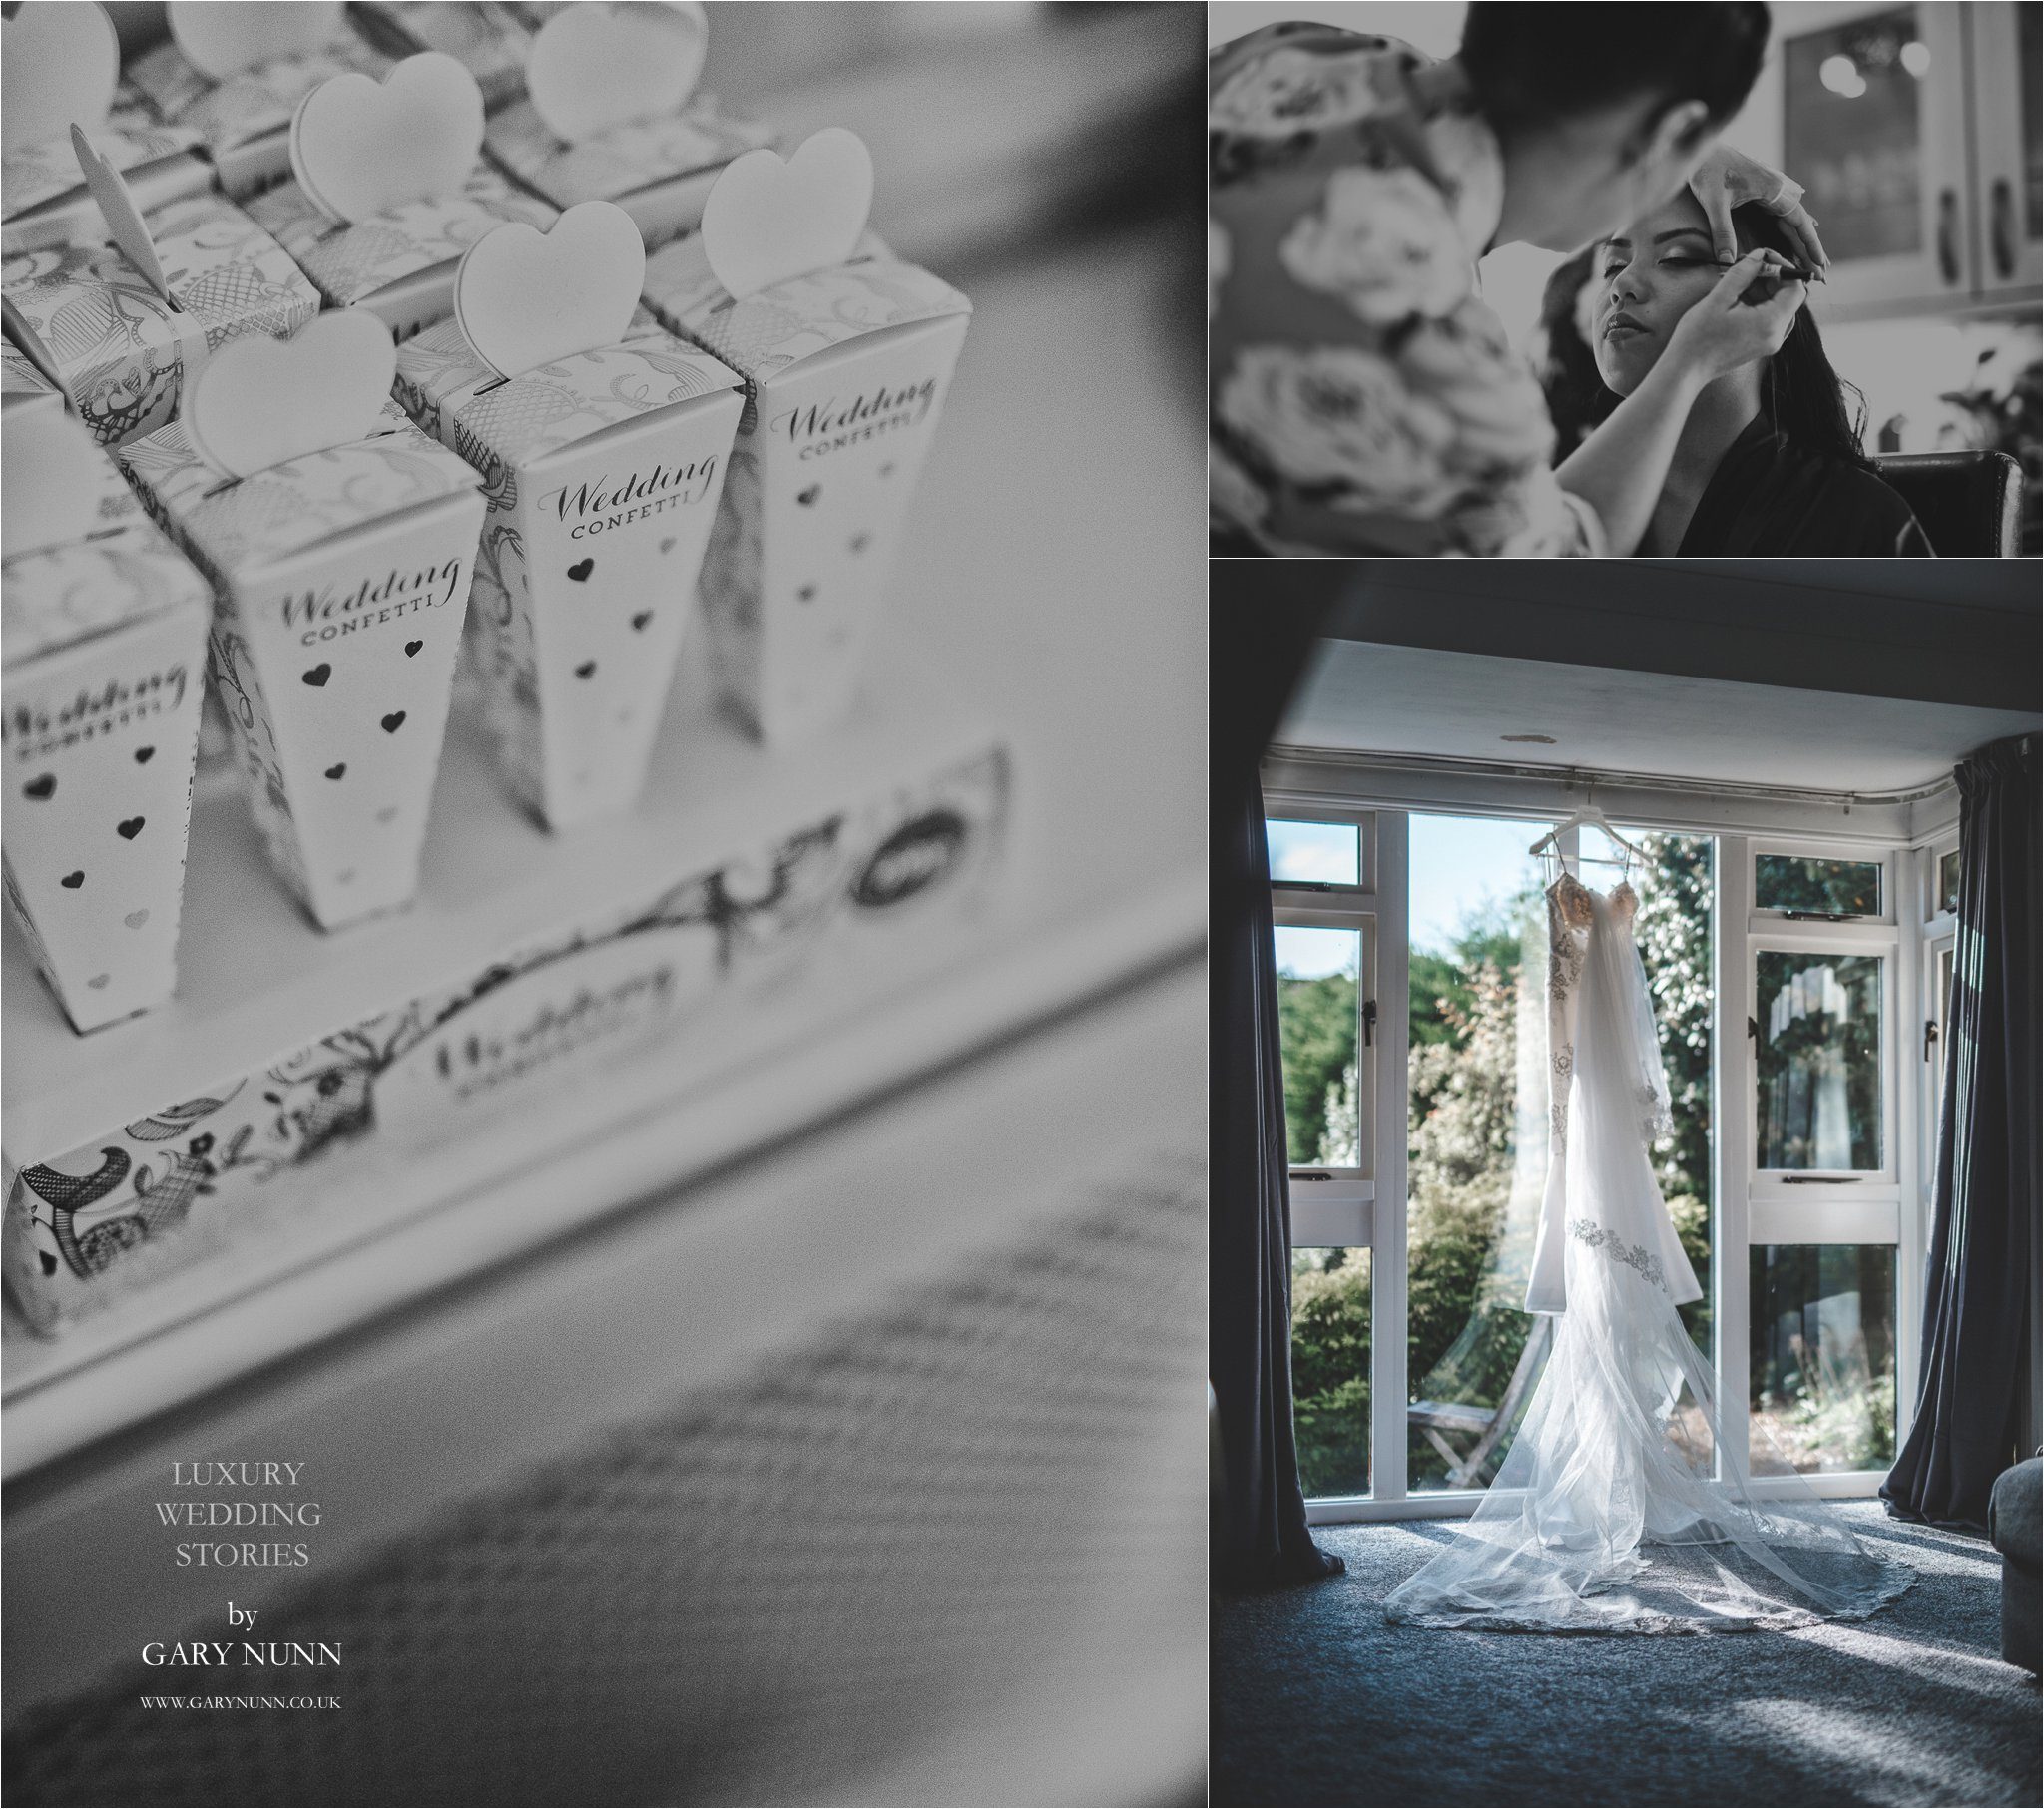 Chicheley Hall Weddings, wedding photographer Milton Keynes, Wedding Photographer Leighton Buzzard, wedding photographer Bedfordshire, destination wedding photographer